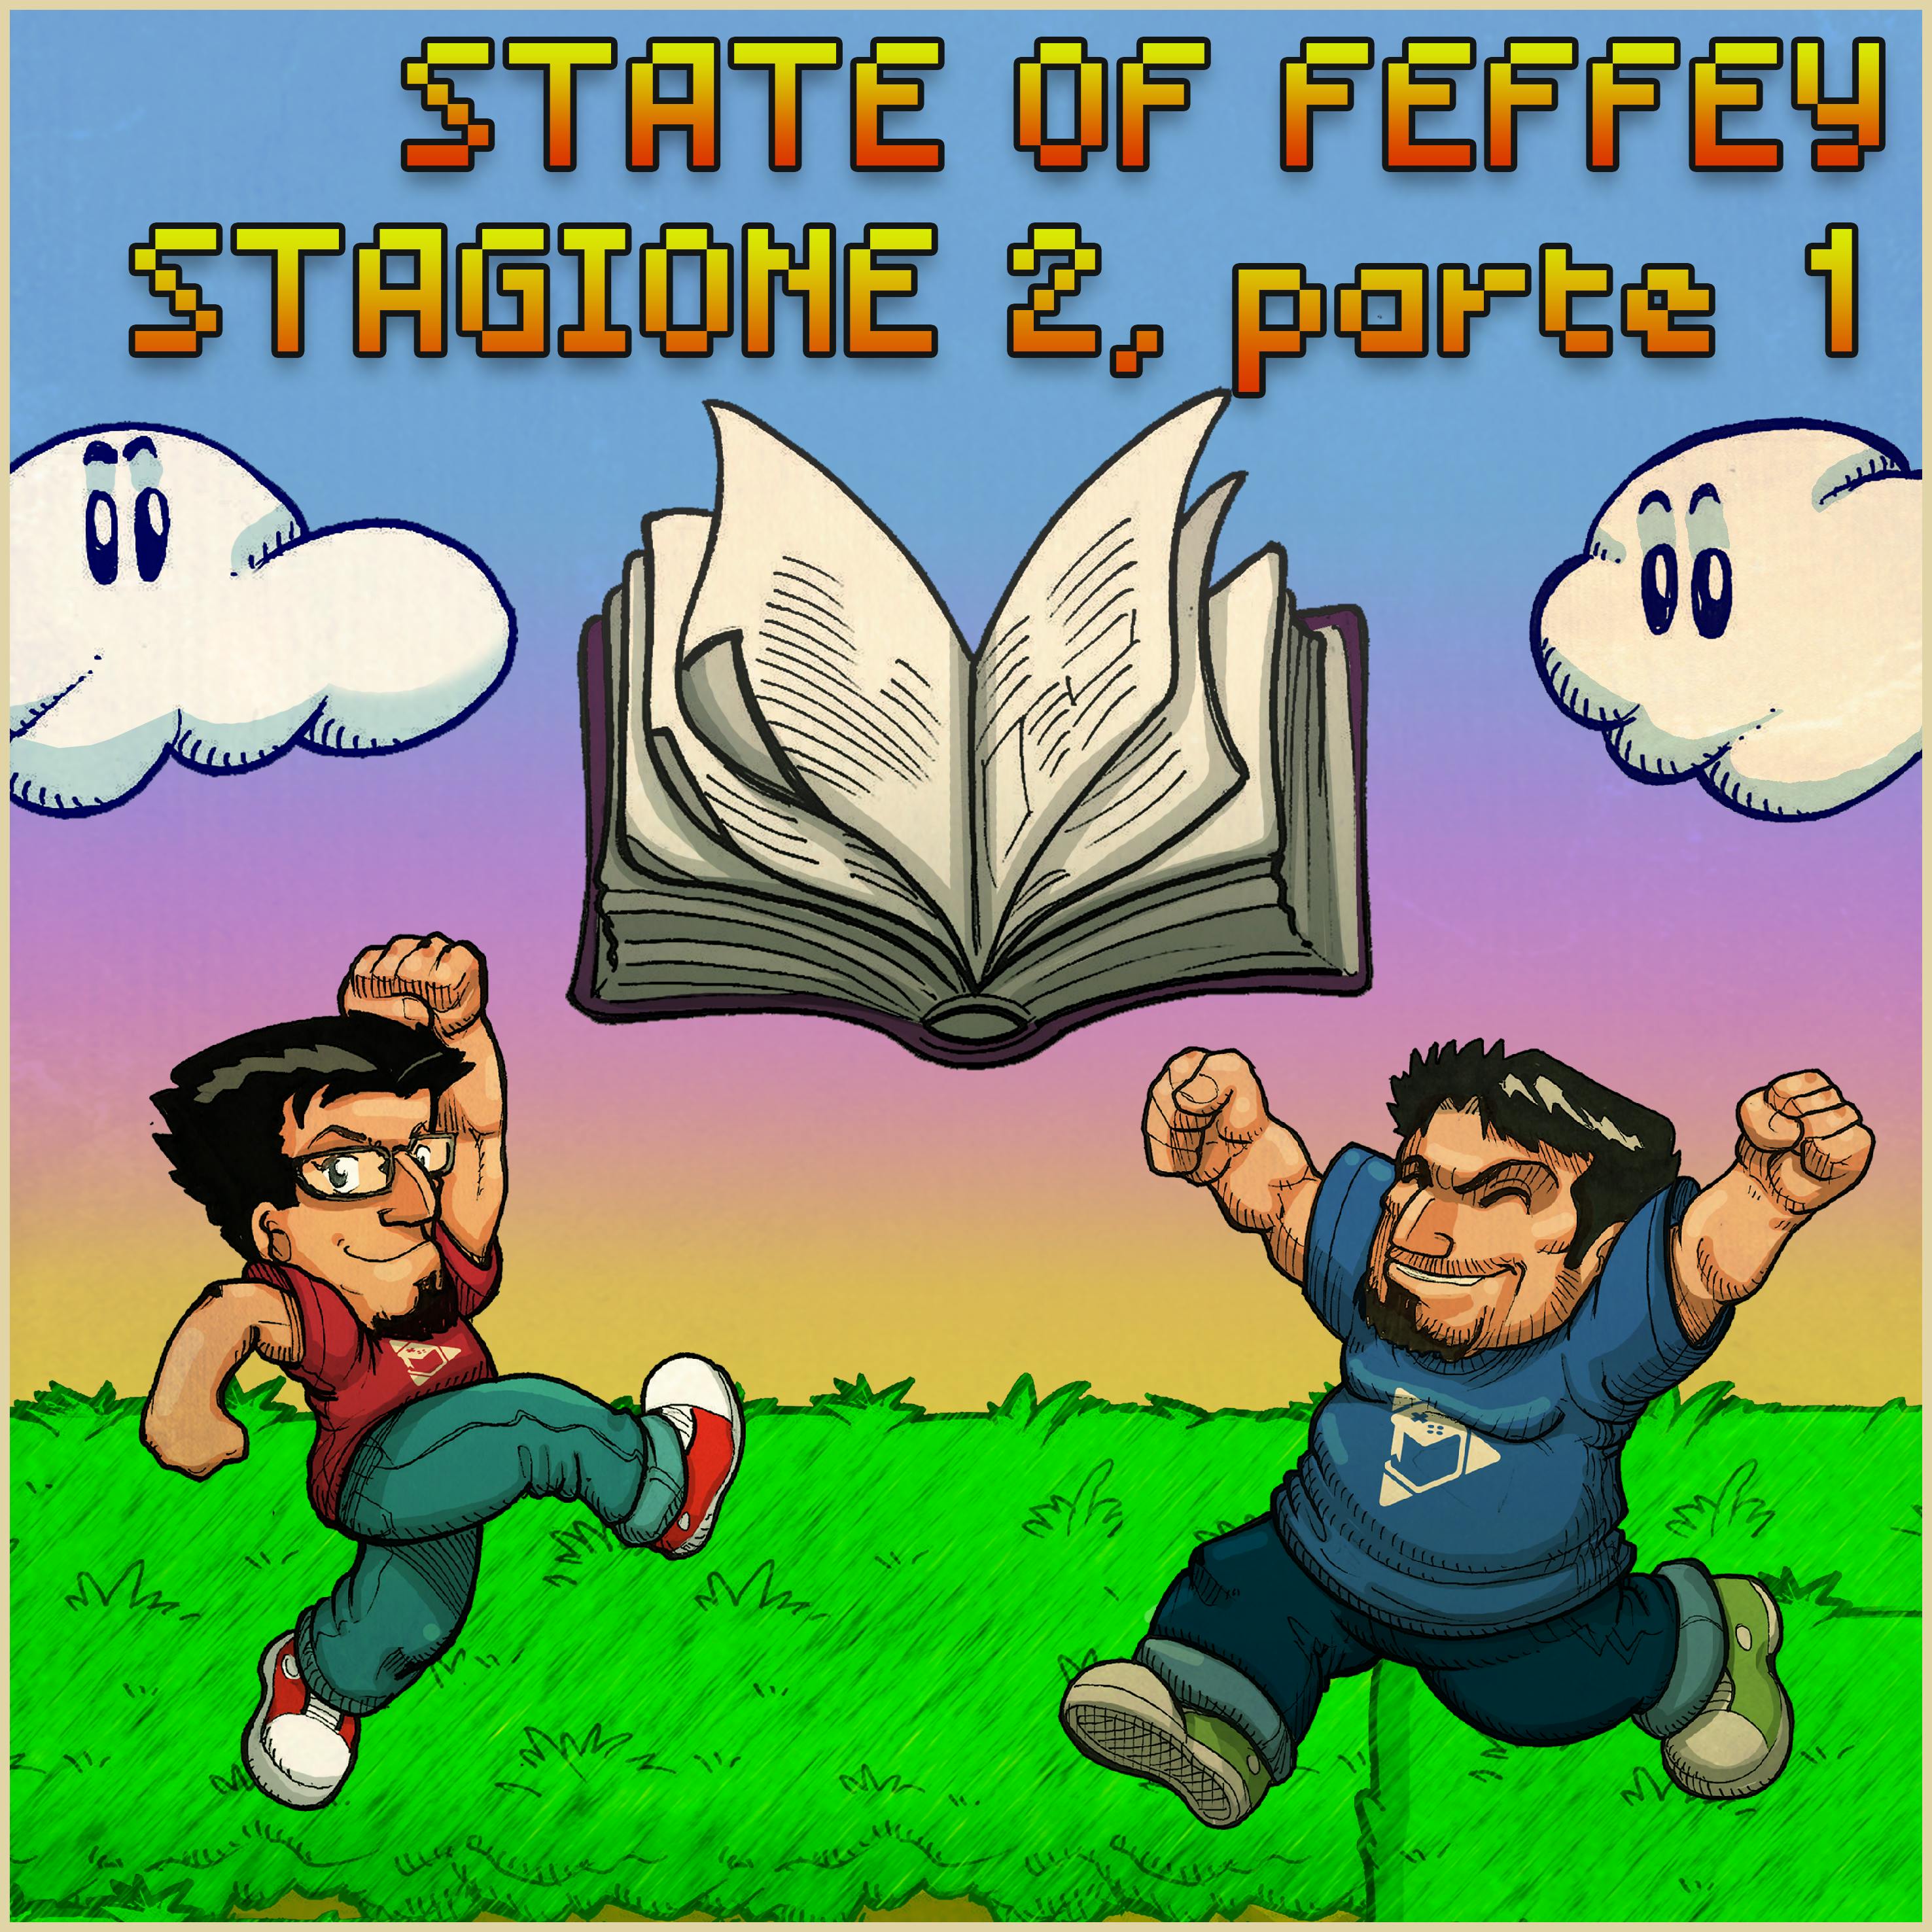 State of Feffey: Stagione 2, parte 1